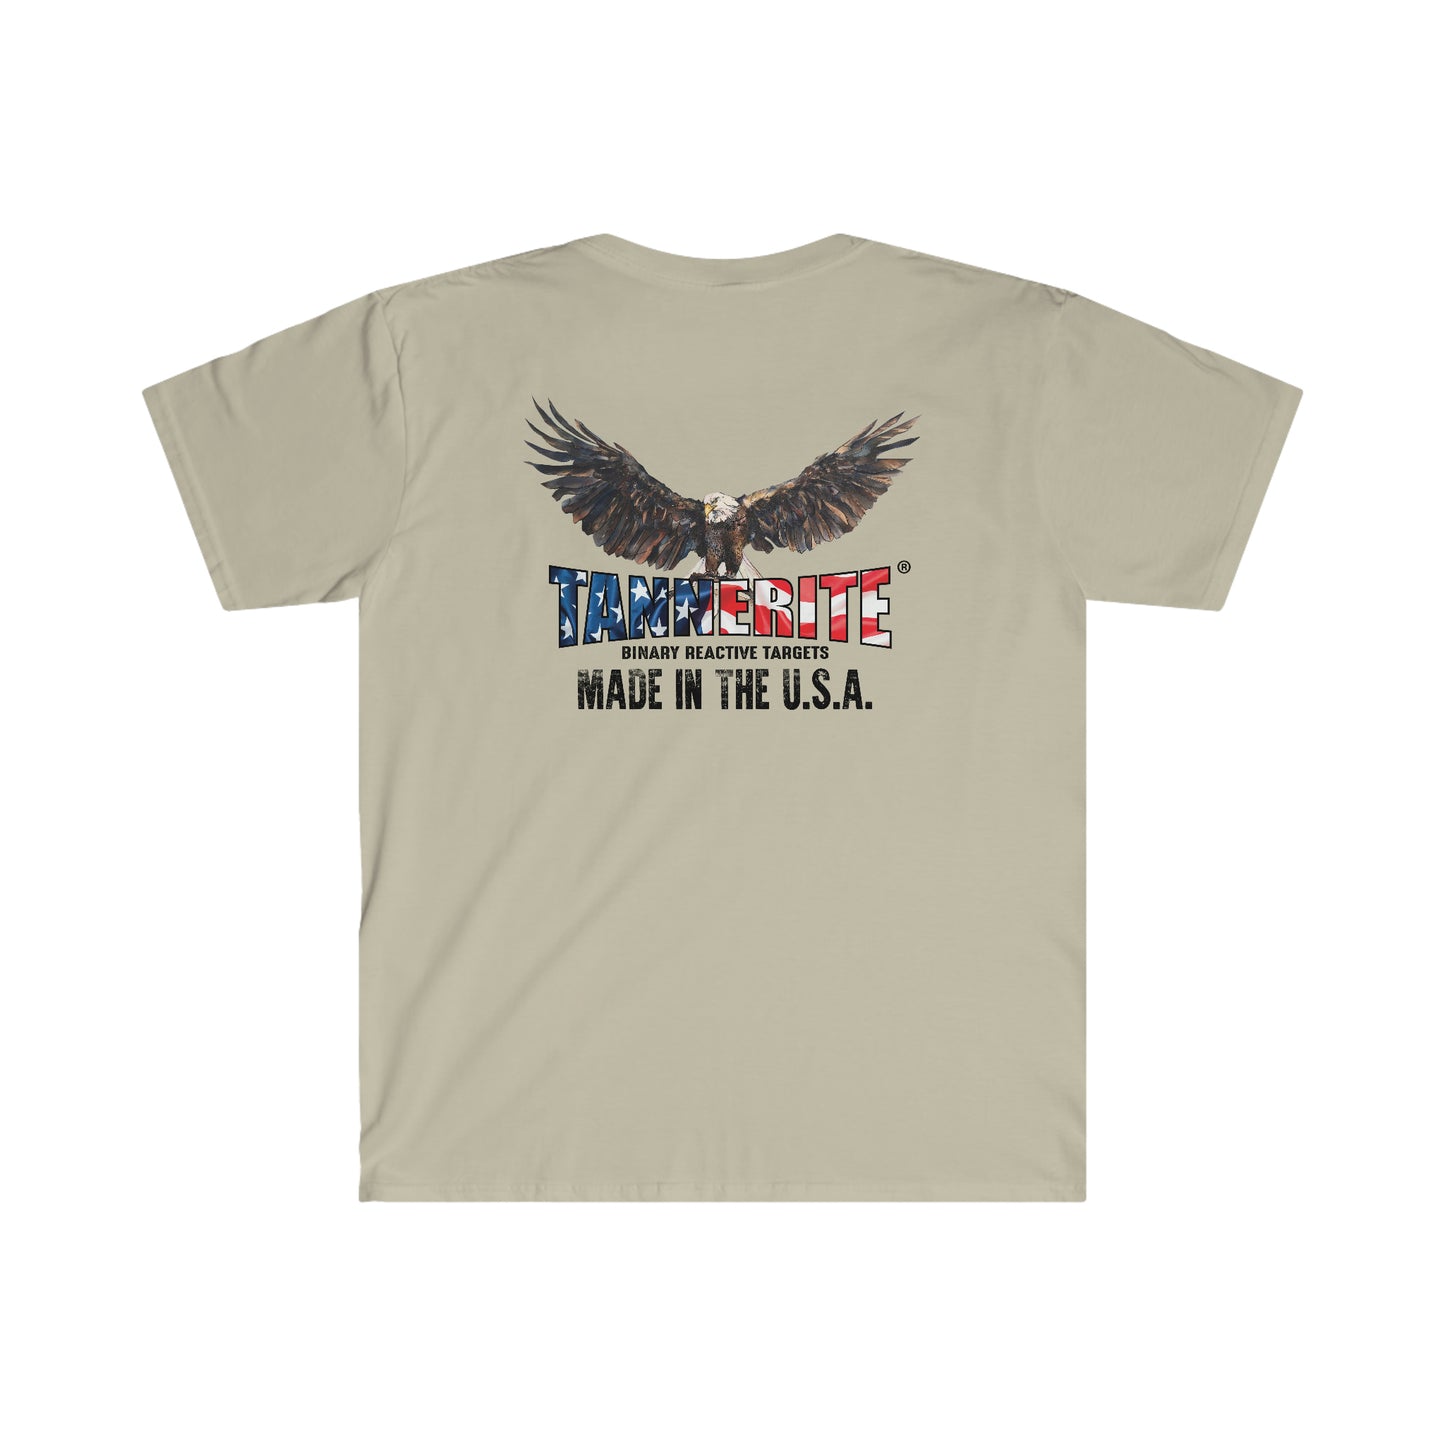 American Eagle Tannerite® T-shirt Original Artwork and Logo